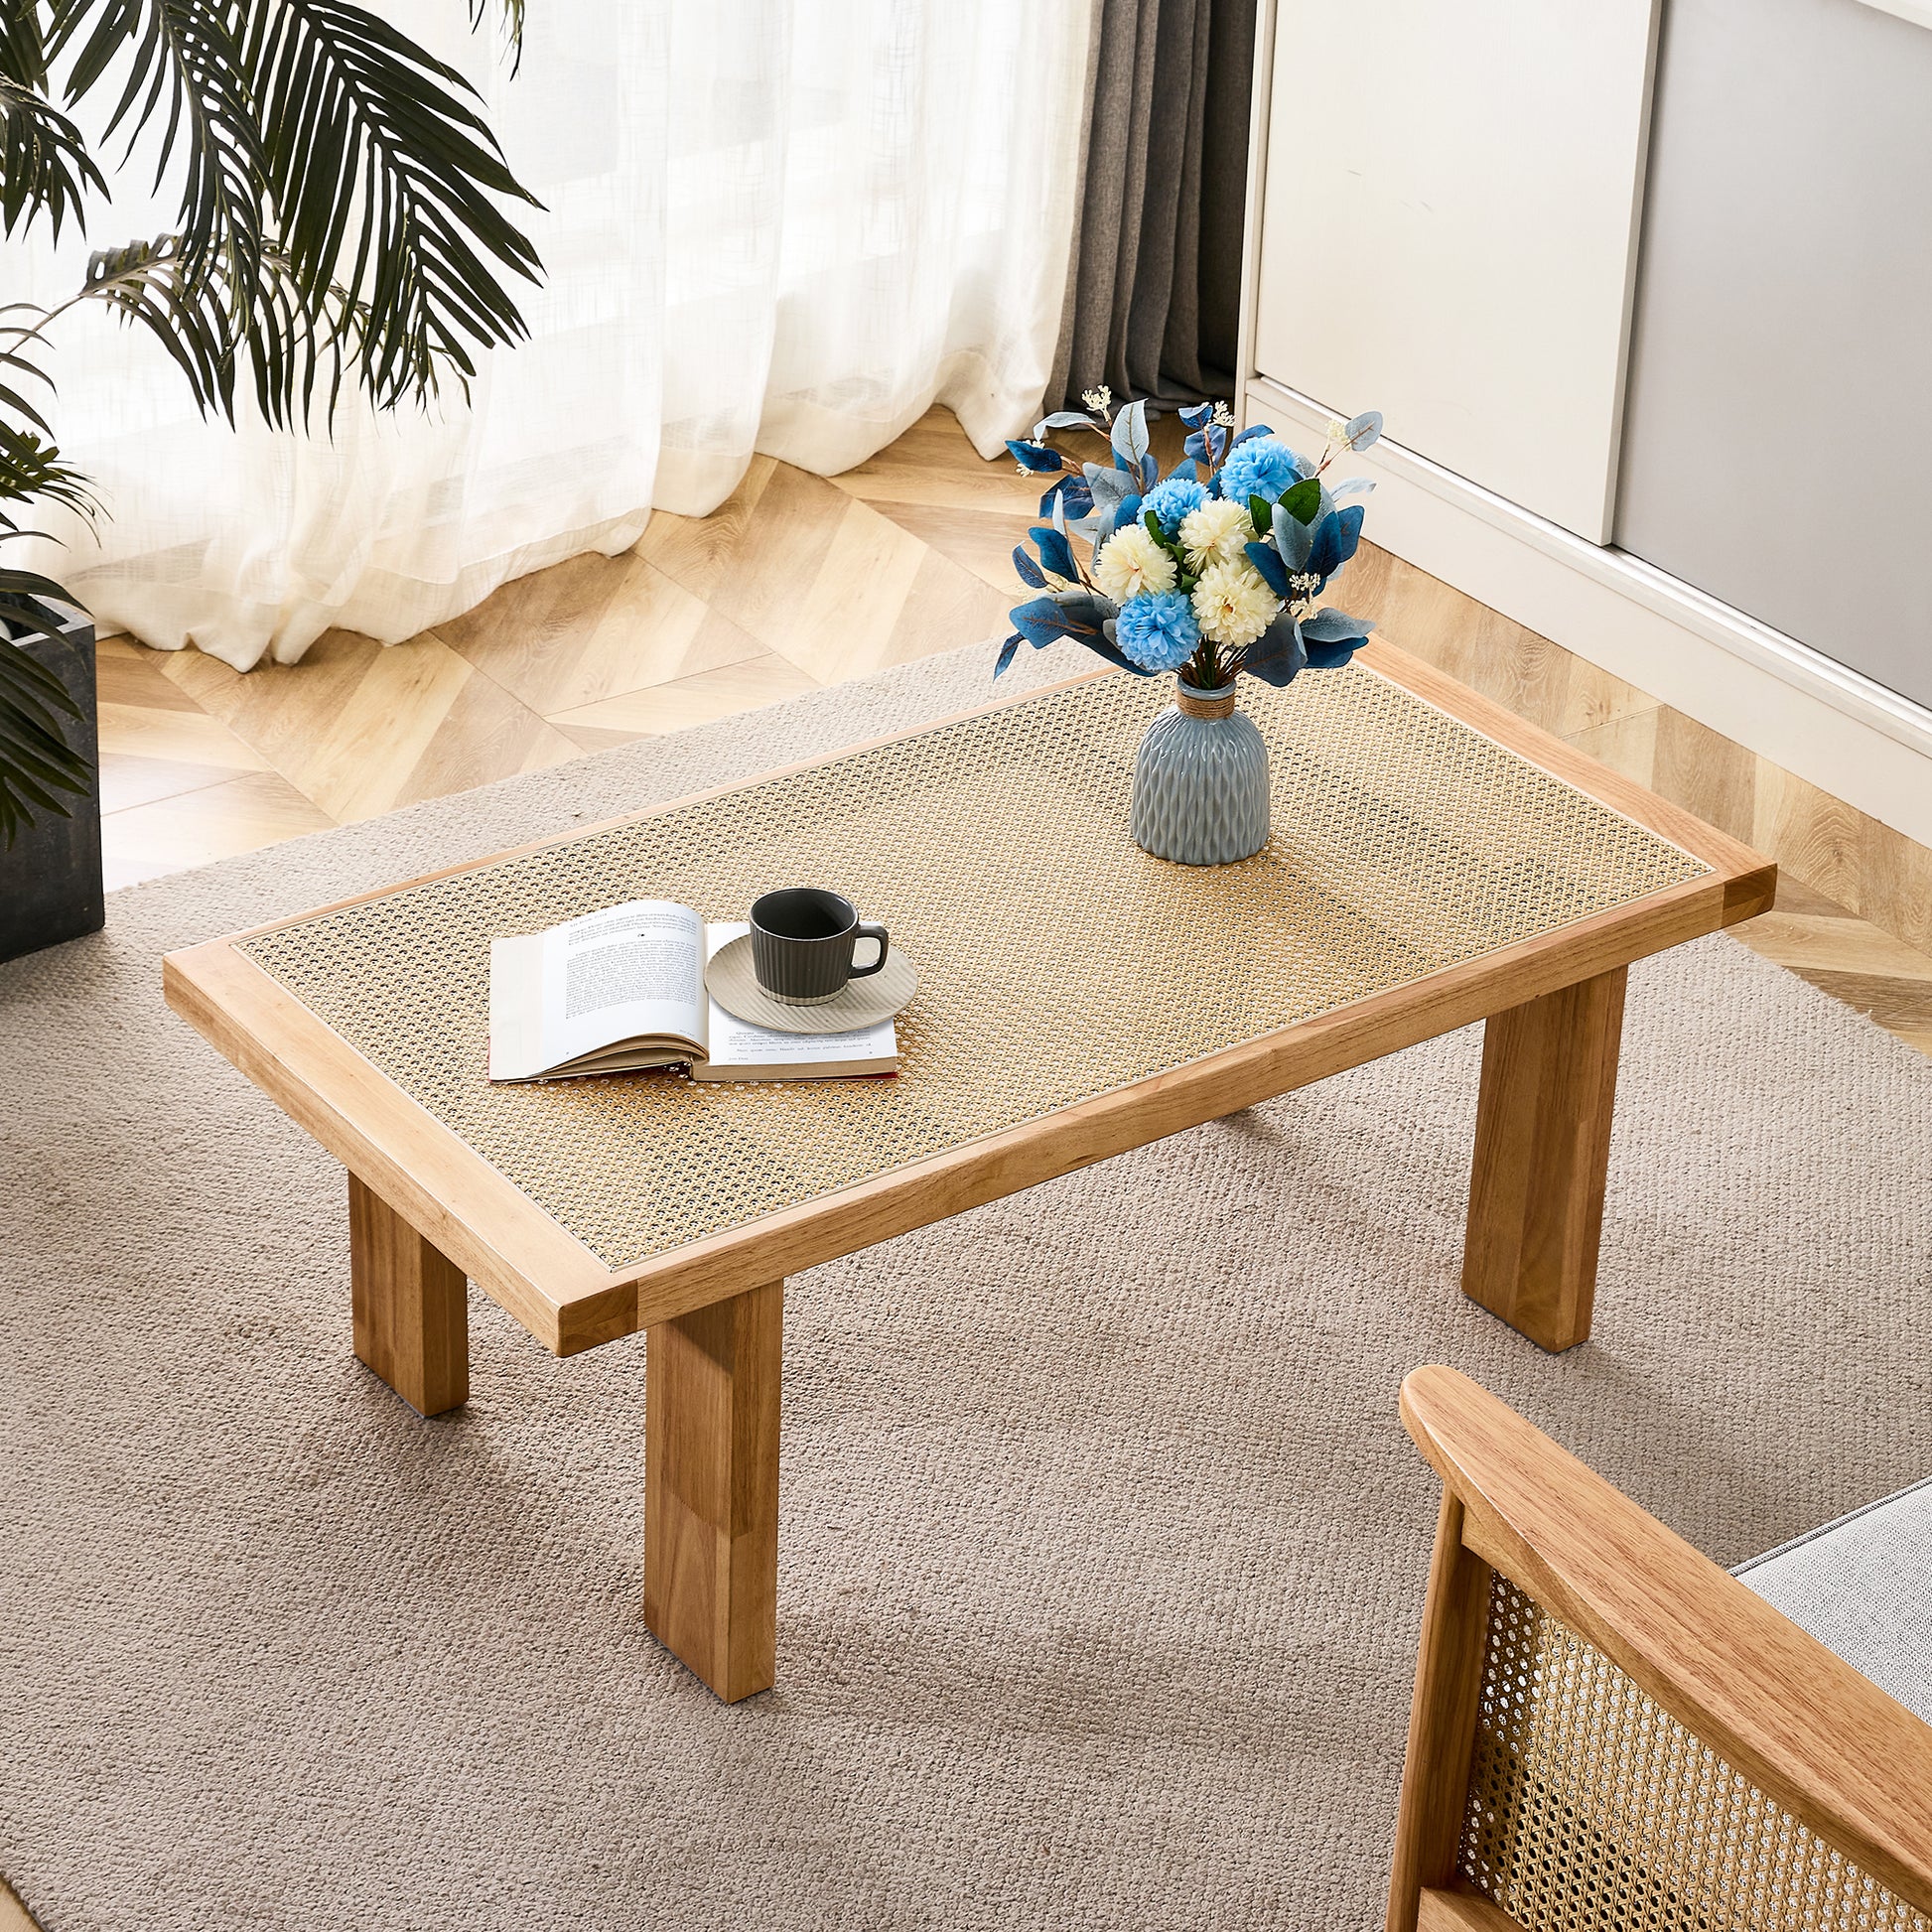 Rectangular rattan tabletop with rubber wooden legs - Ukerr Home